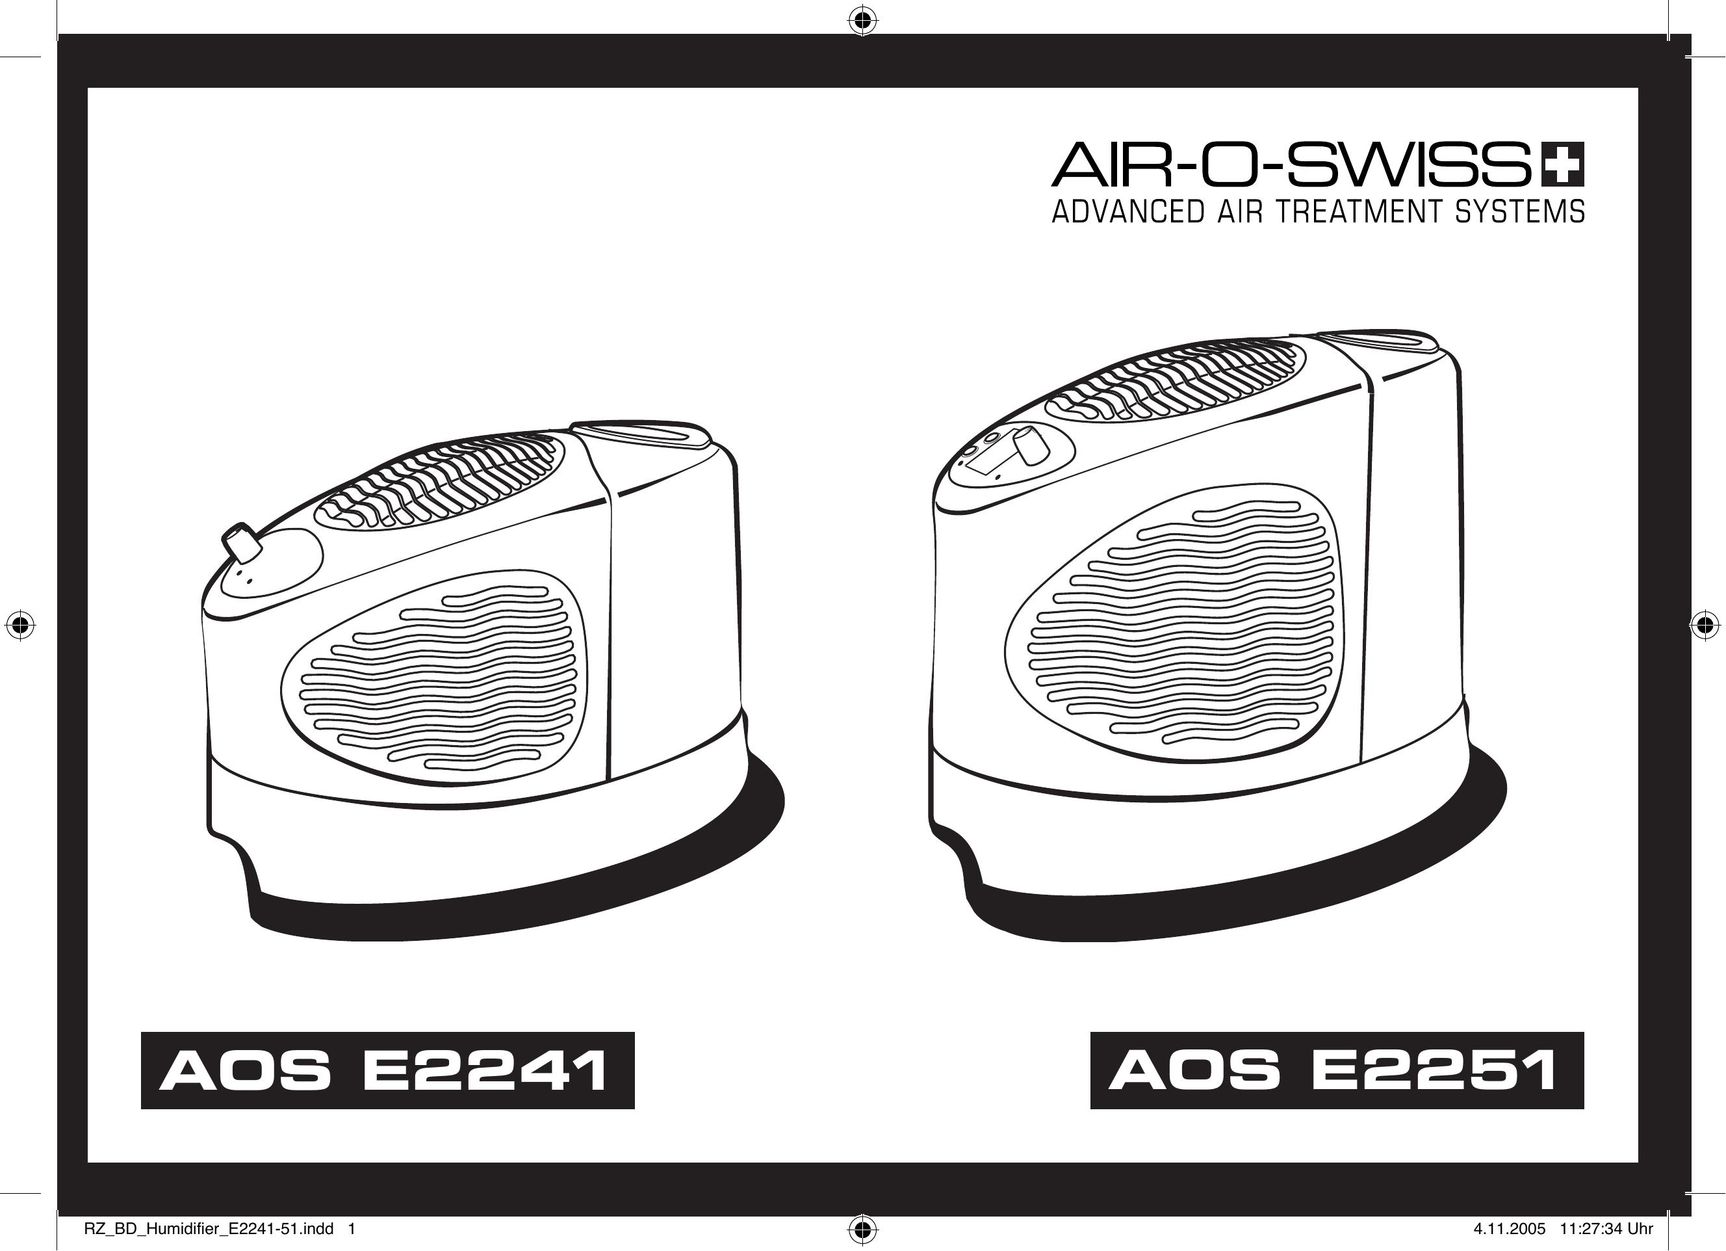 Air-O-Swiss AOS E2251 Humidifier User Manual